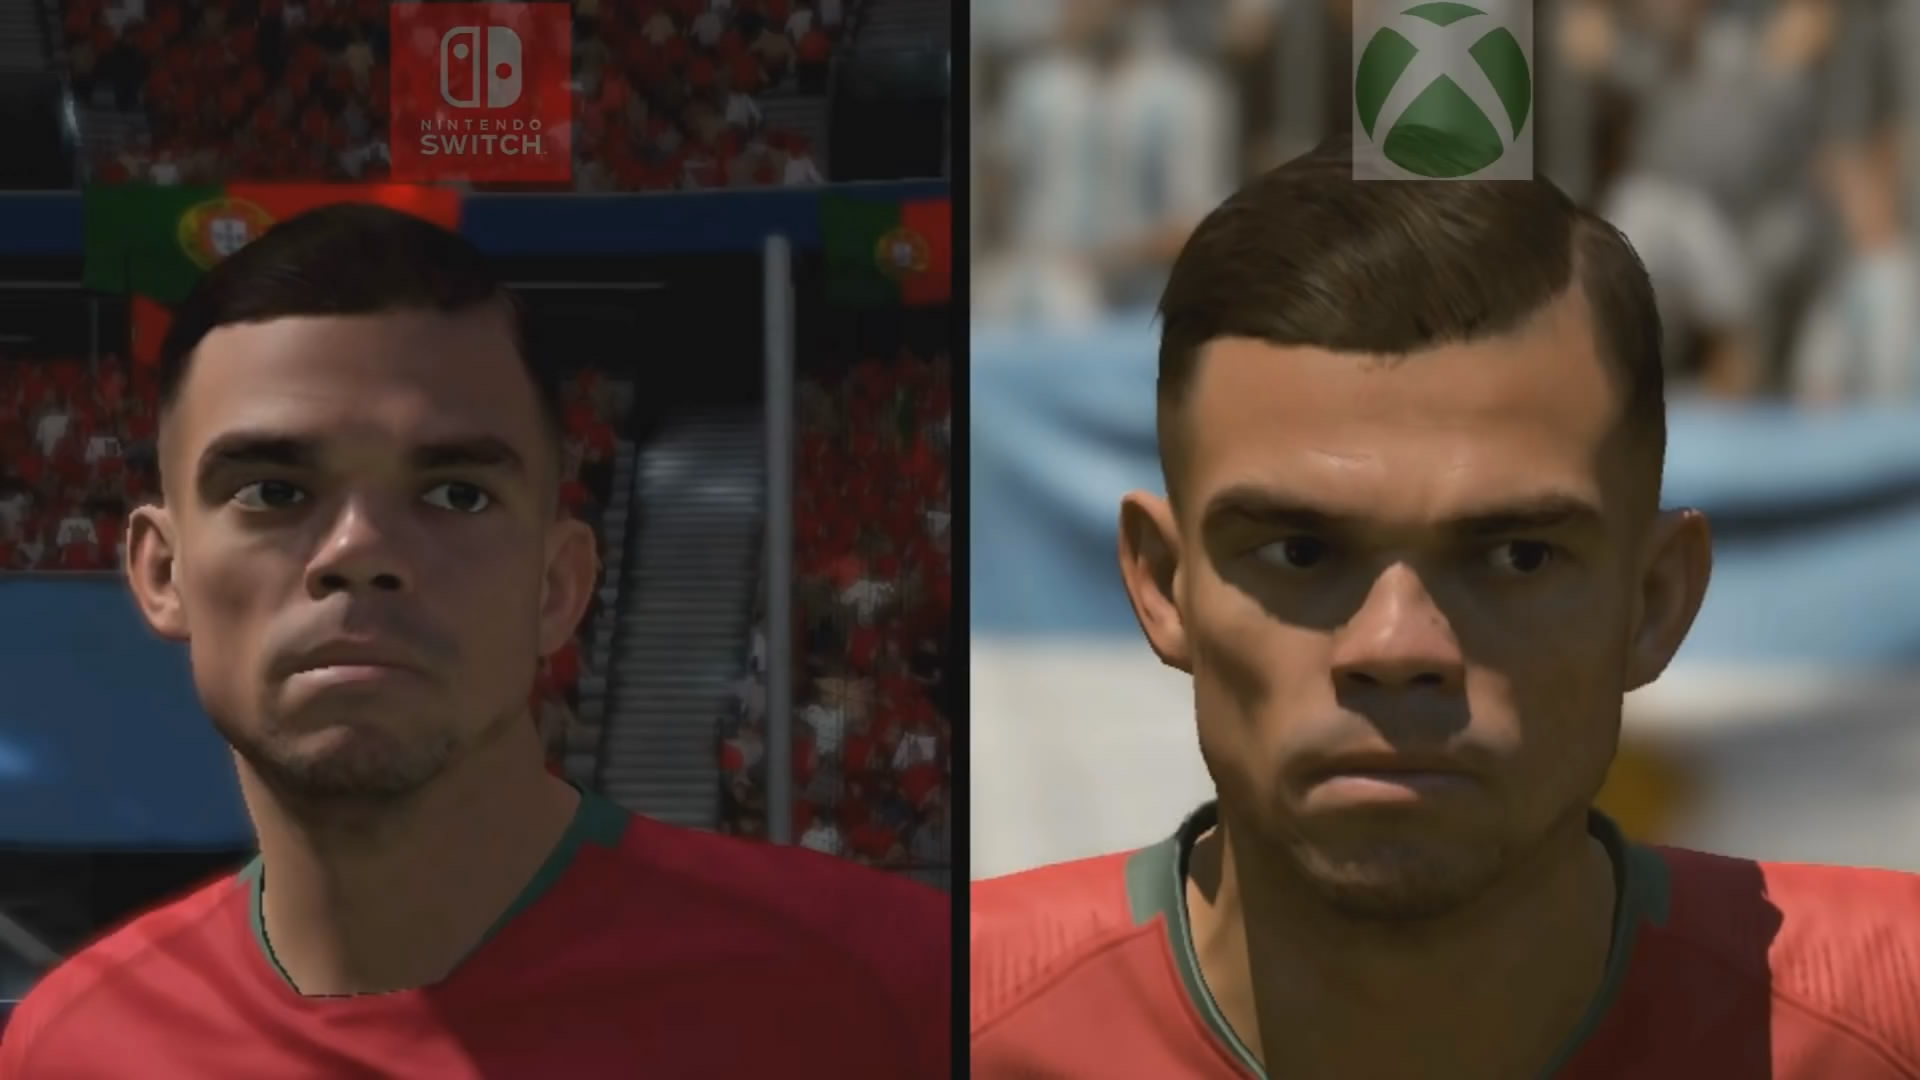 《FIFA 19》XboxOne与Switch版画面对比 谁更强大?